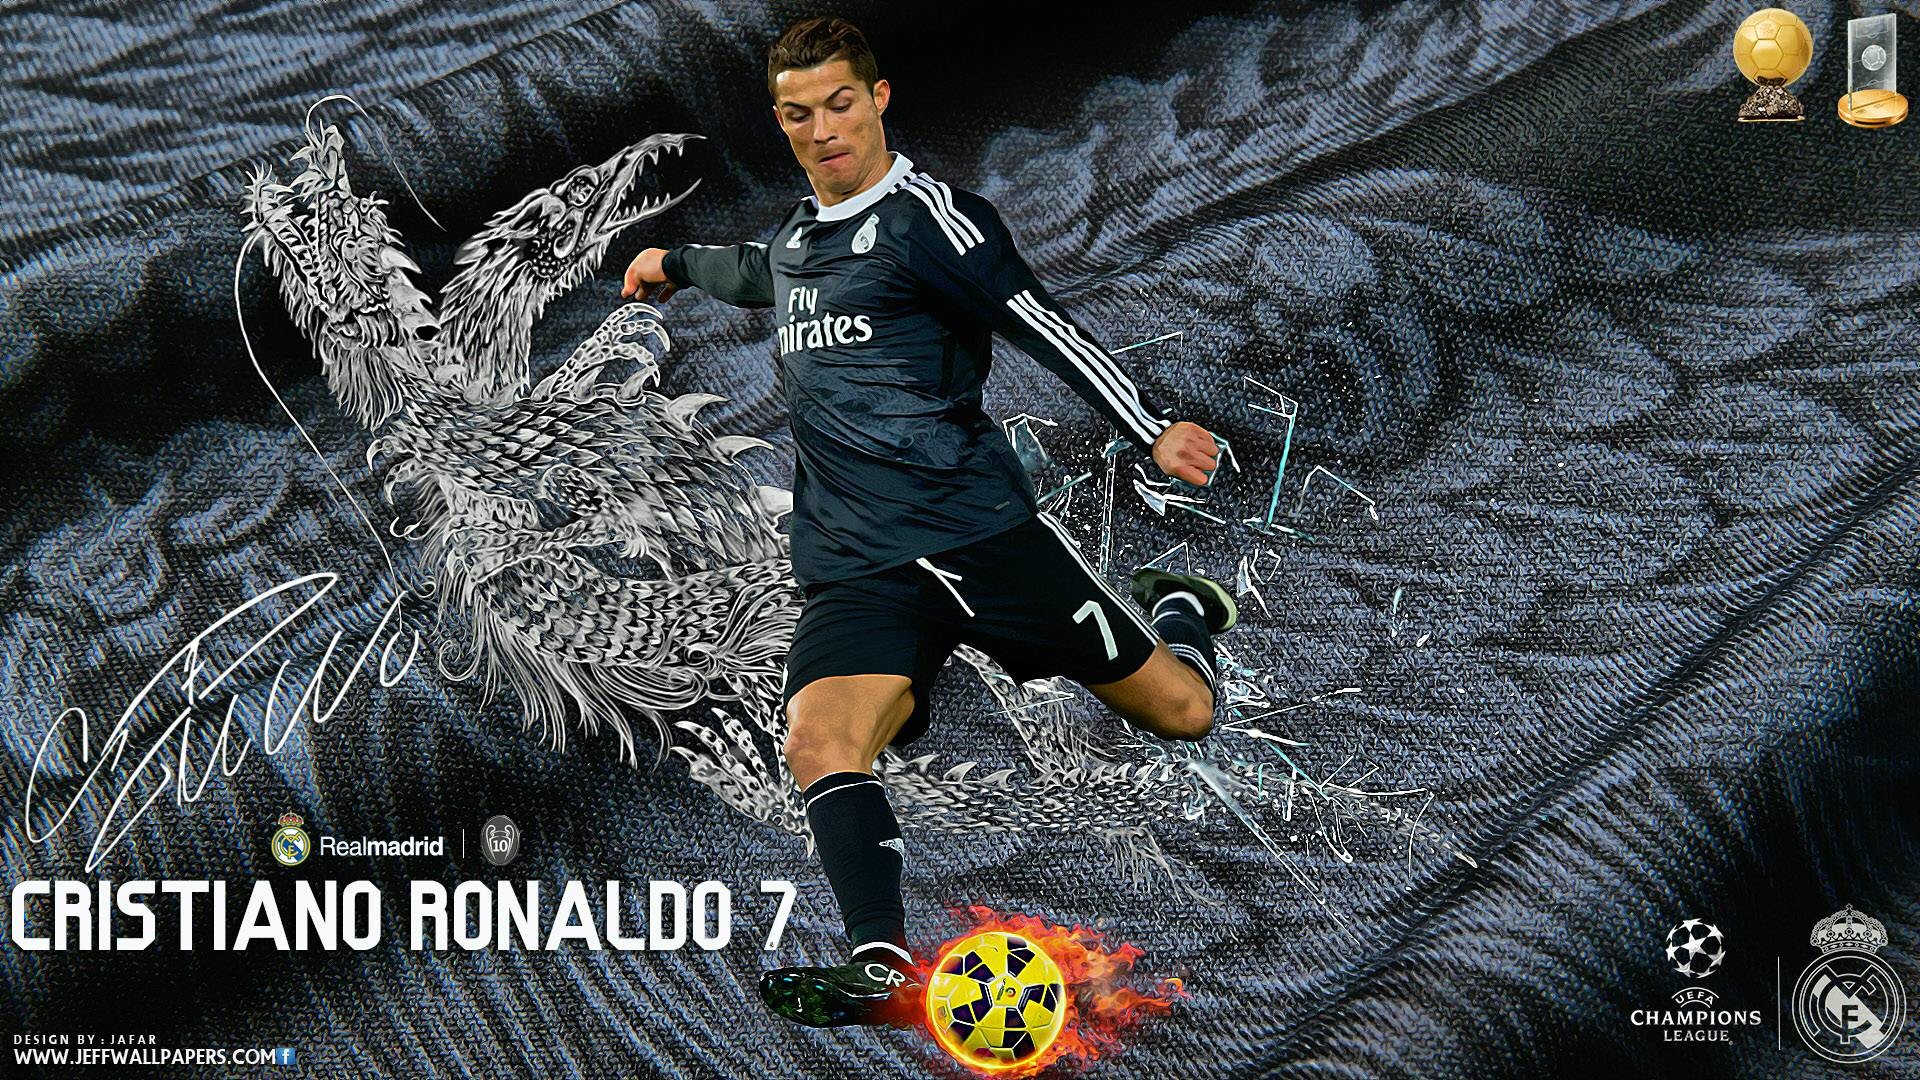 Cristiano Ronaldo Real Madrid Wallpaper 2018 by ArtsGFX99 on DeviantArt